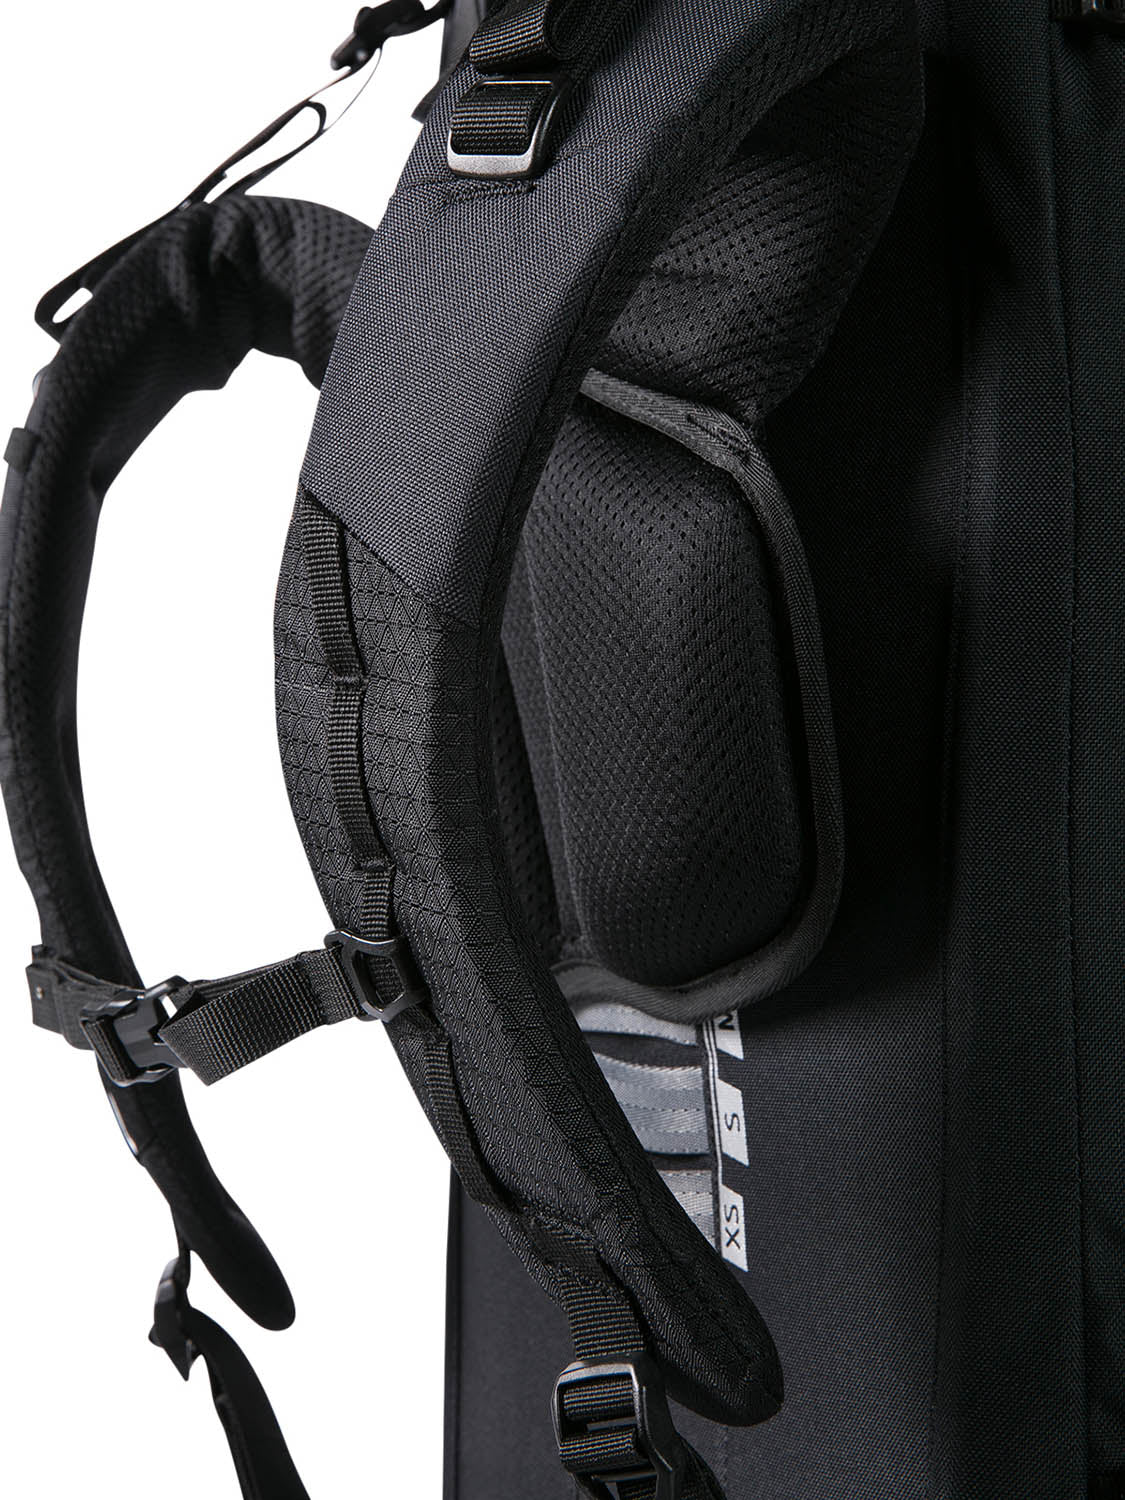 Berghaus Trailhead 65 Backpack - Black